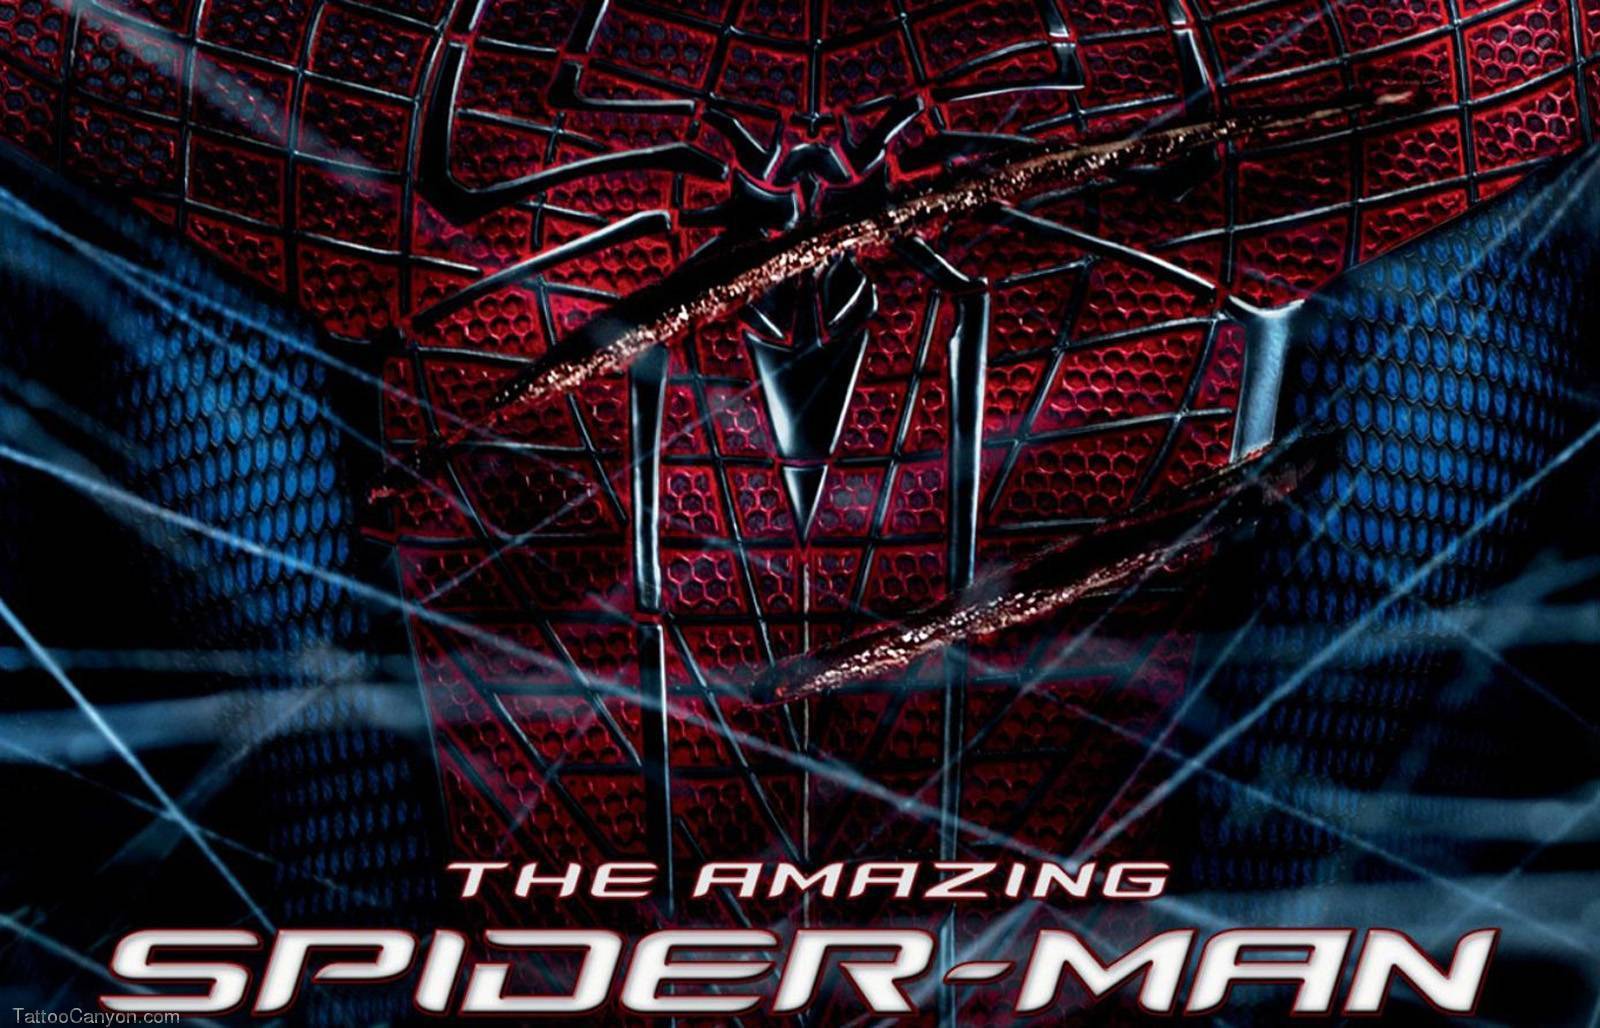 Spiderman Logo Movie Wallpaper Spider Web Tattoo Ajilbabcom Portal